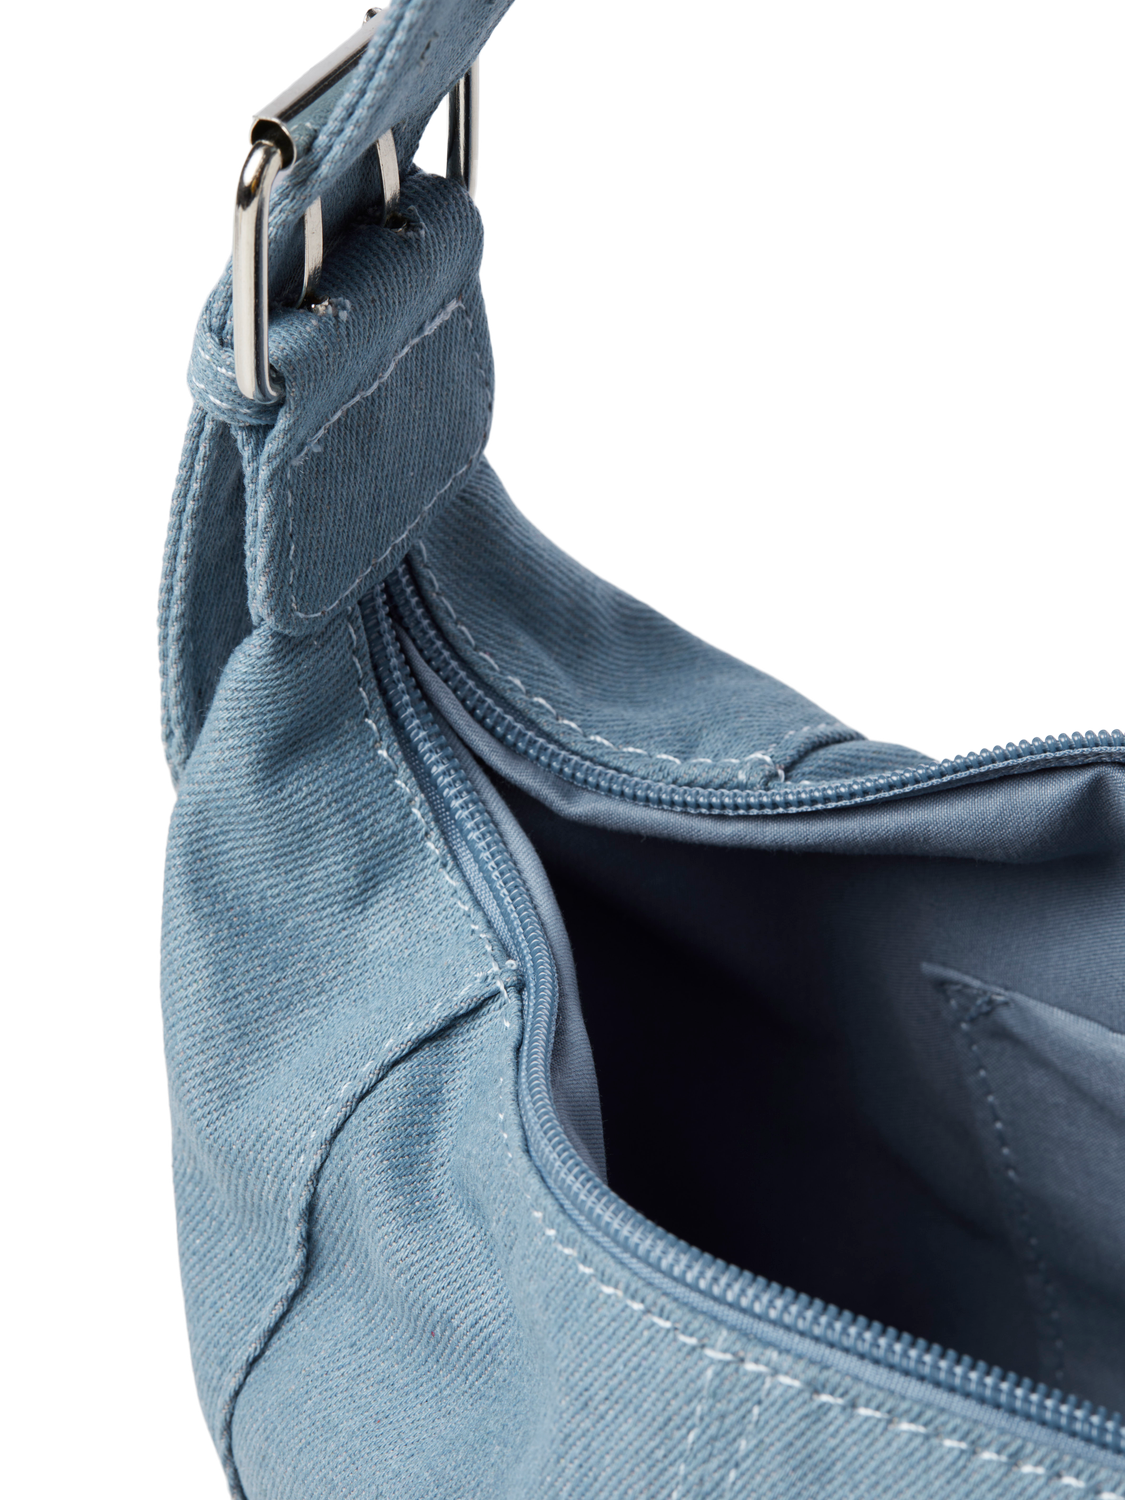 JJXX Τσάντα για τον ώμο -Denim Blue - 12251588